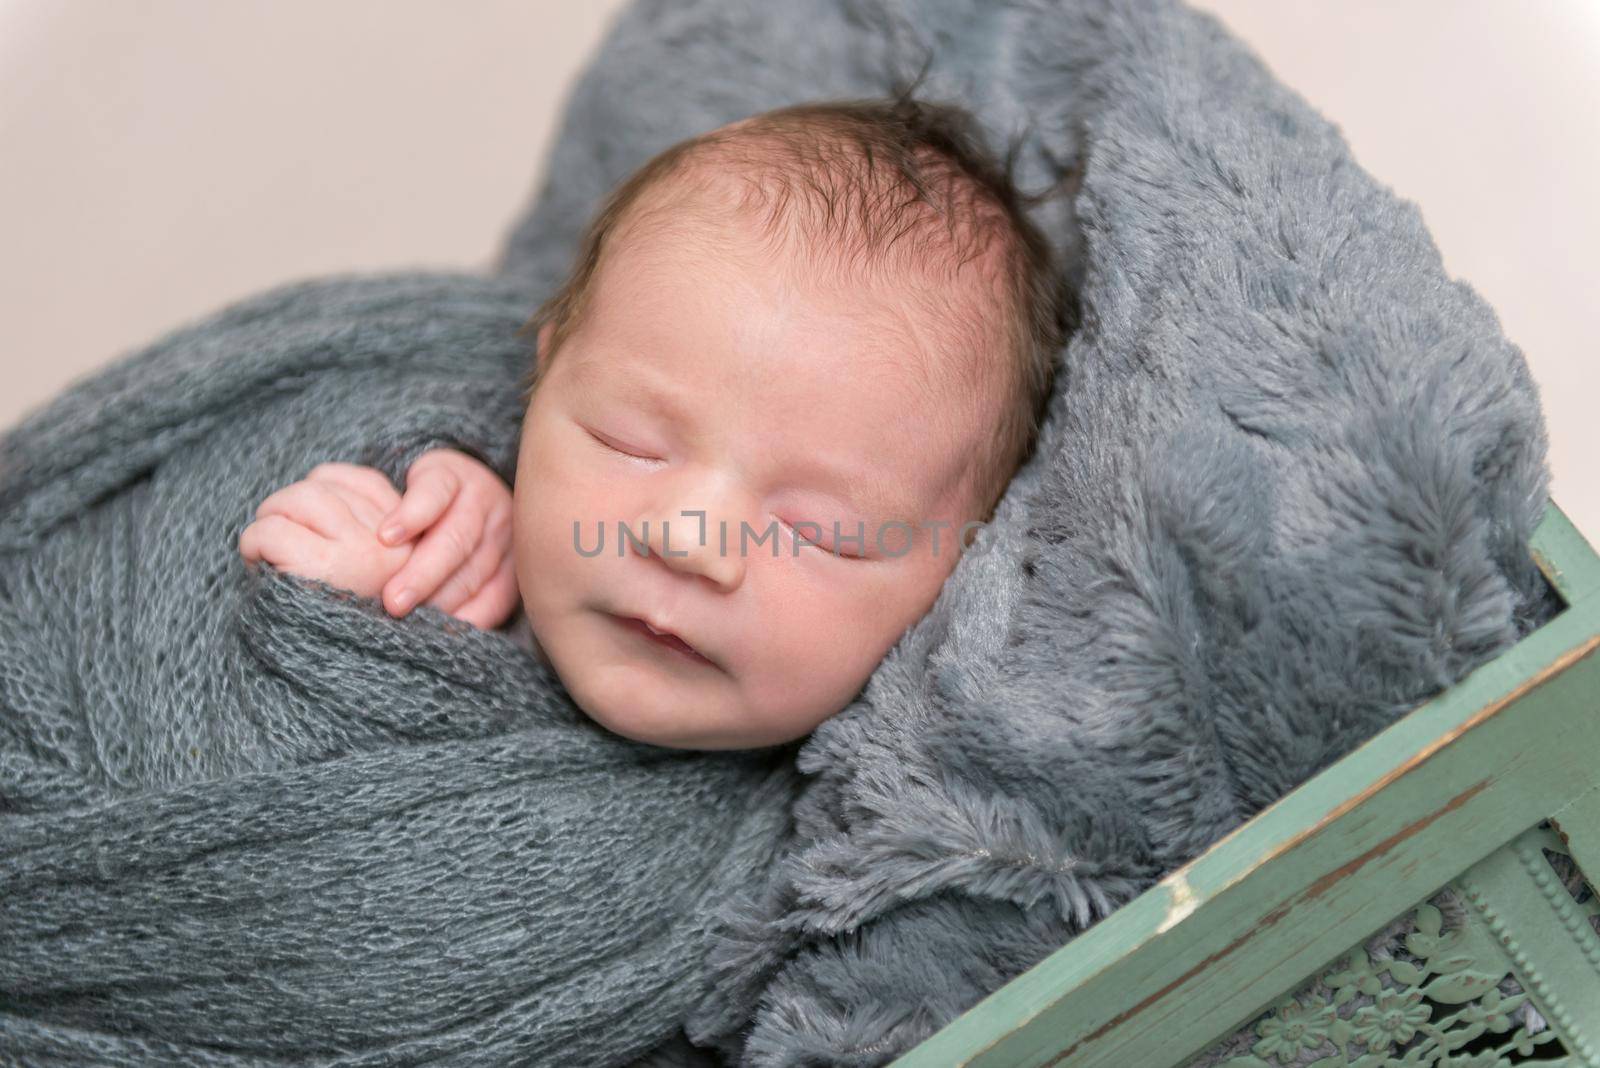 Hairy infant sleeping in basket, closeup by tan4ikk1